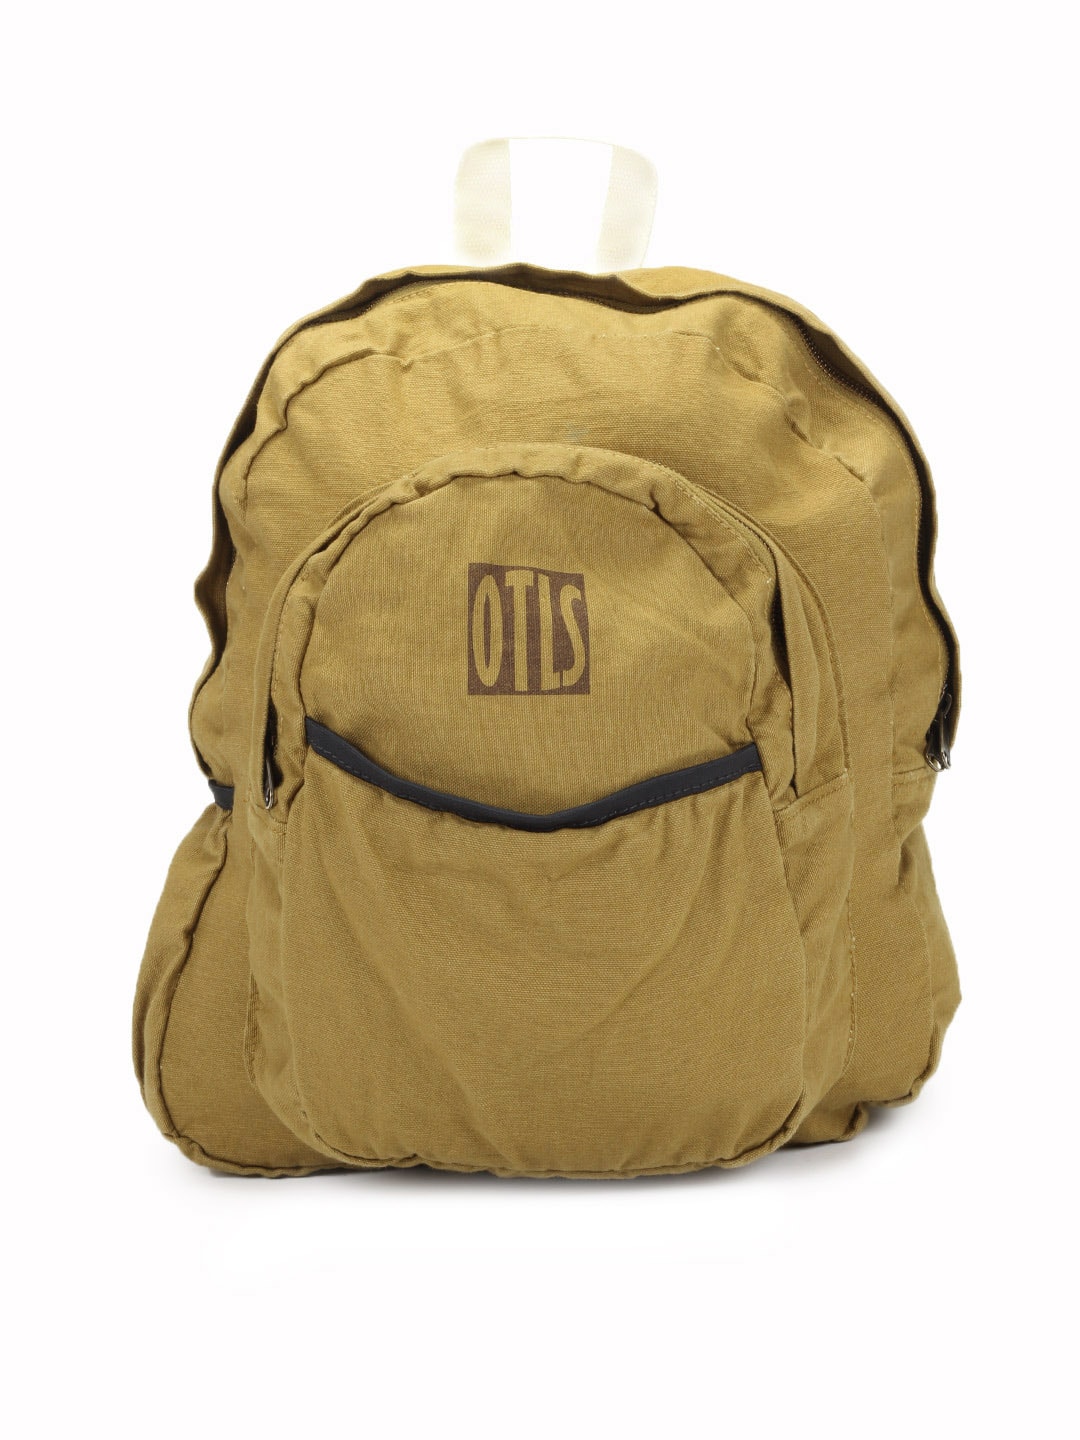 OTLS Unisex Mustard Brown Backpack